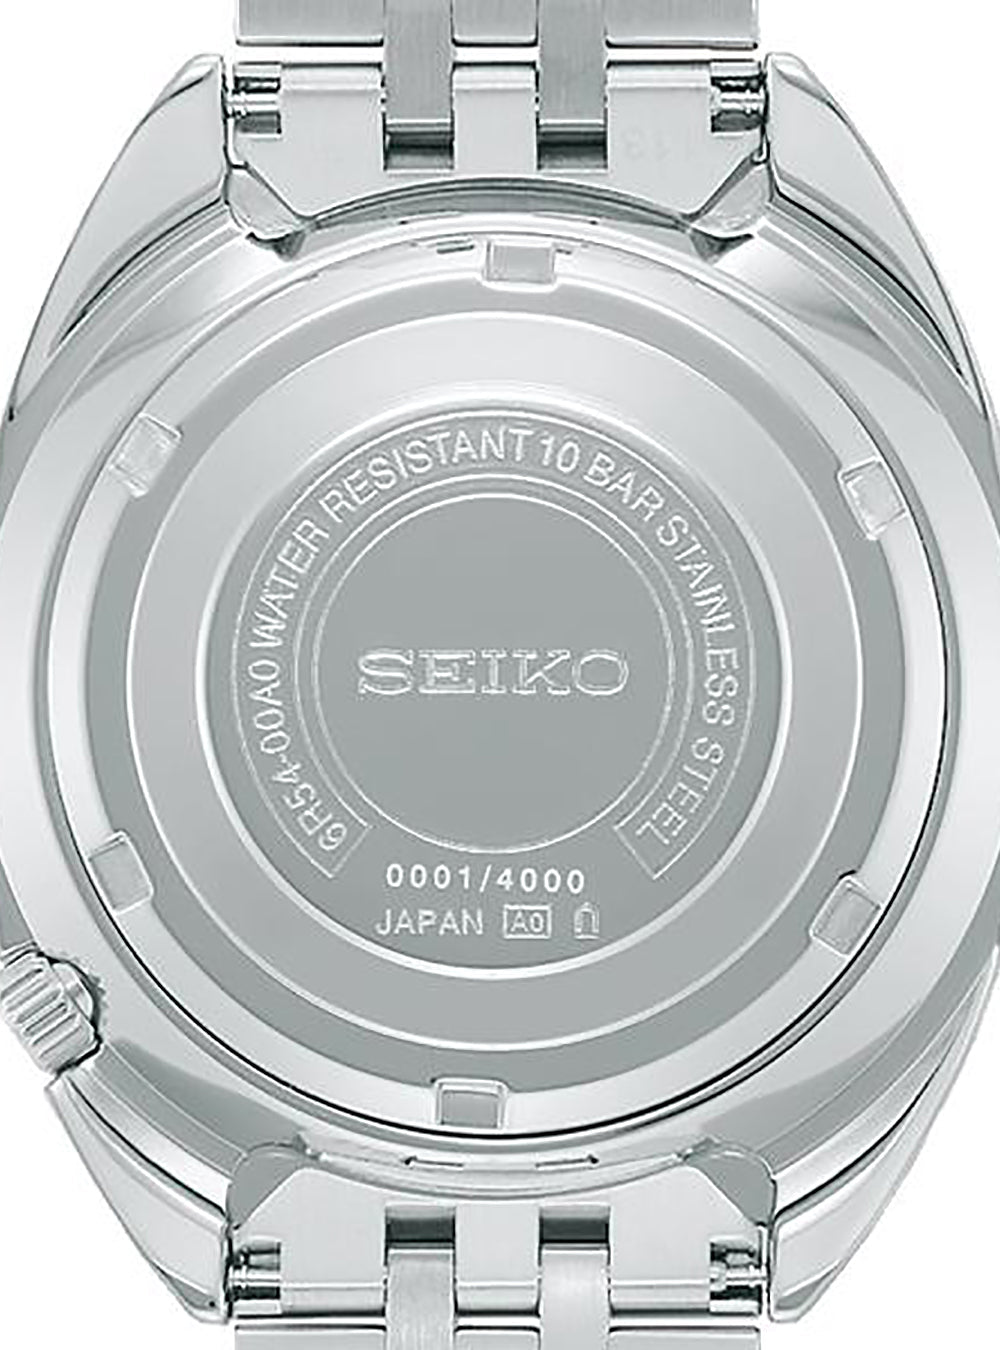 SEIKO WATCH PROSPEX LAND MECHANICAL GMT LIMITED EDITION SPB411 / SBEJ015 MADE IN JAPAN JDMWRISTWATCHjapan-select